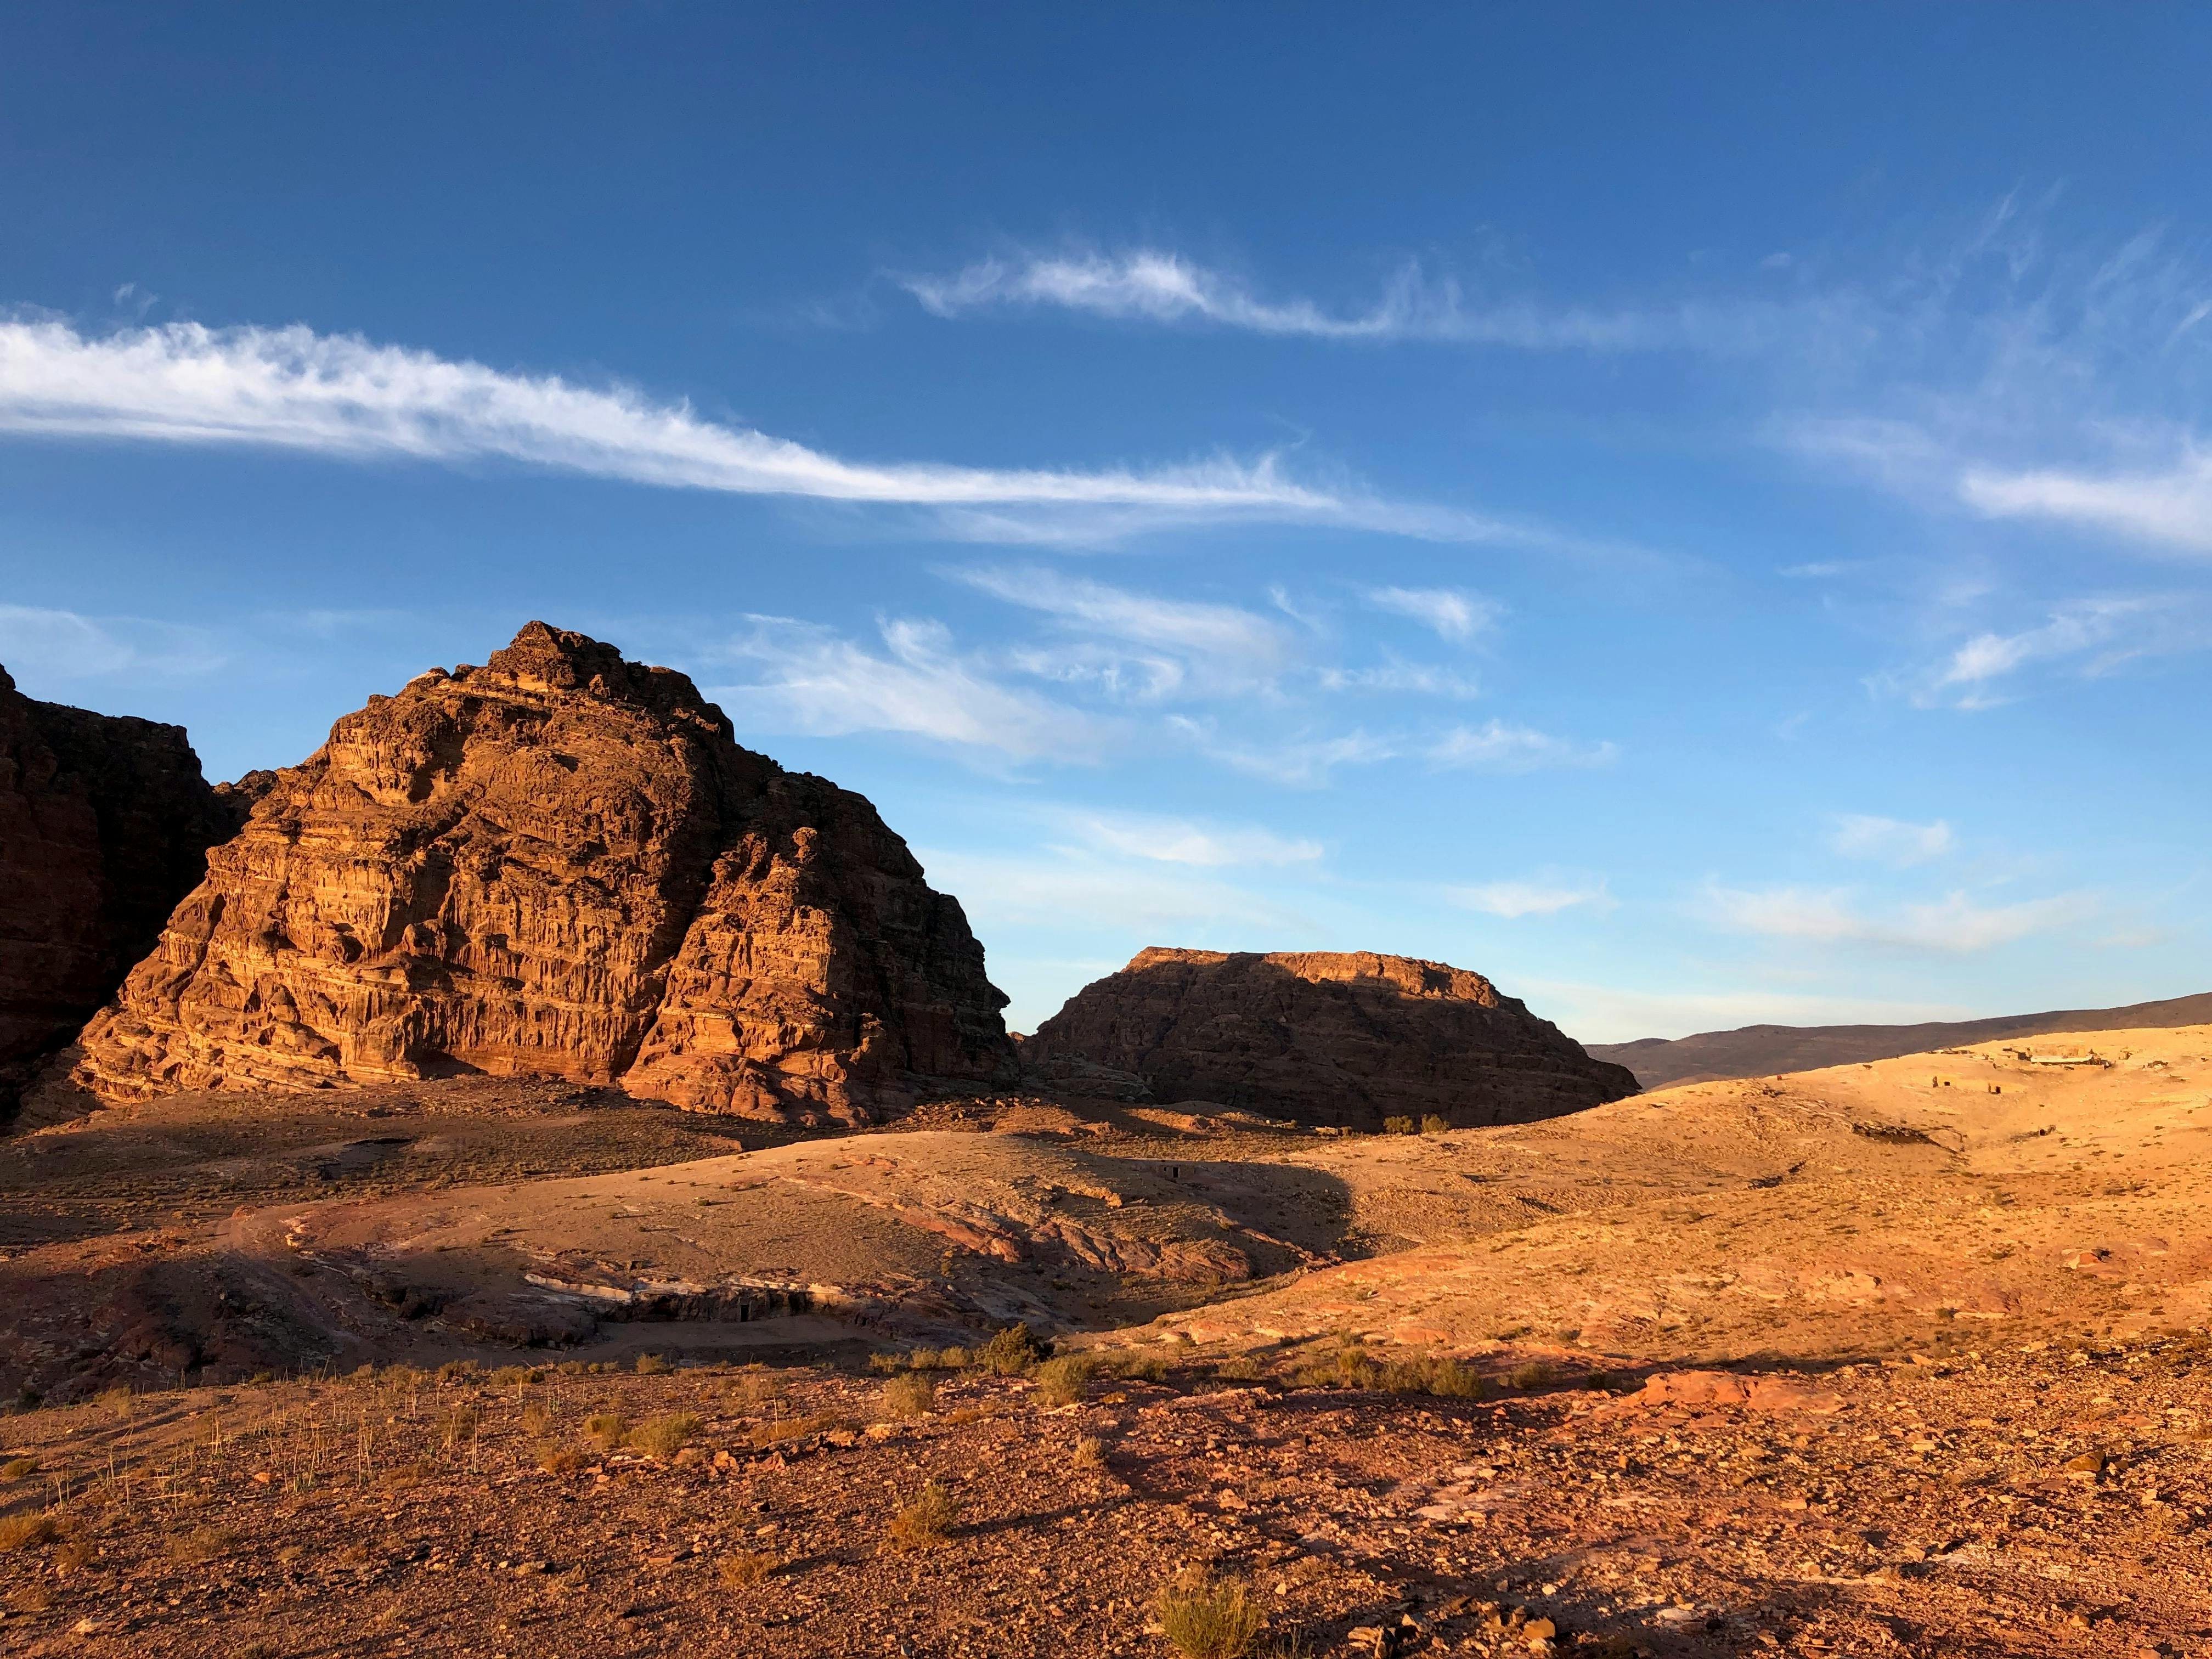  Landscape  Photo of Desert Rock  Formation  Free Stock Photo